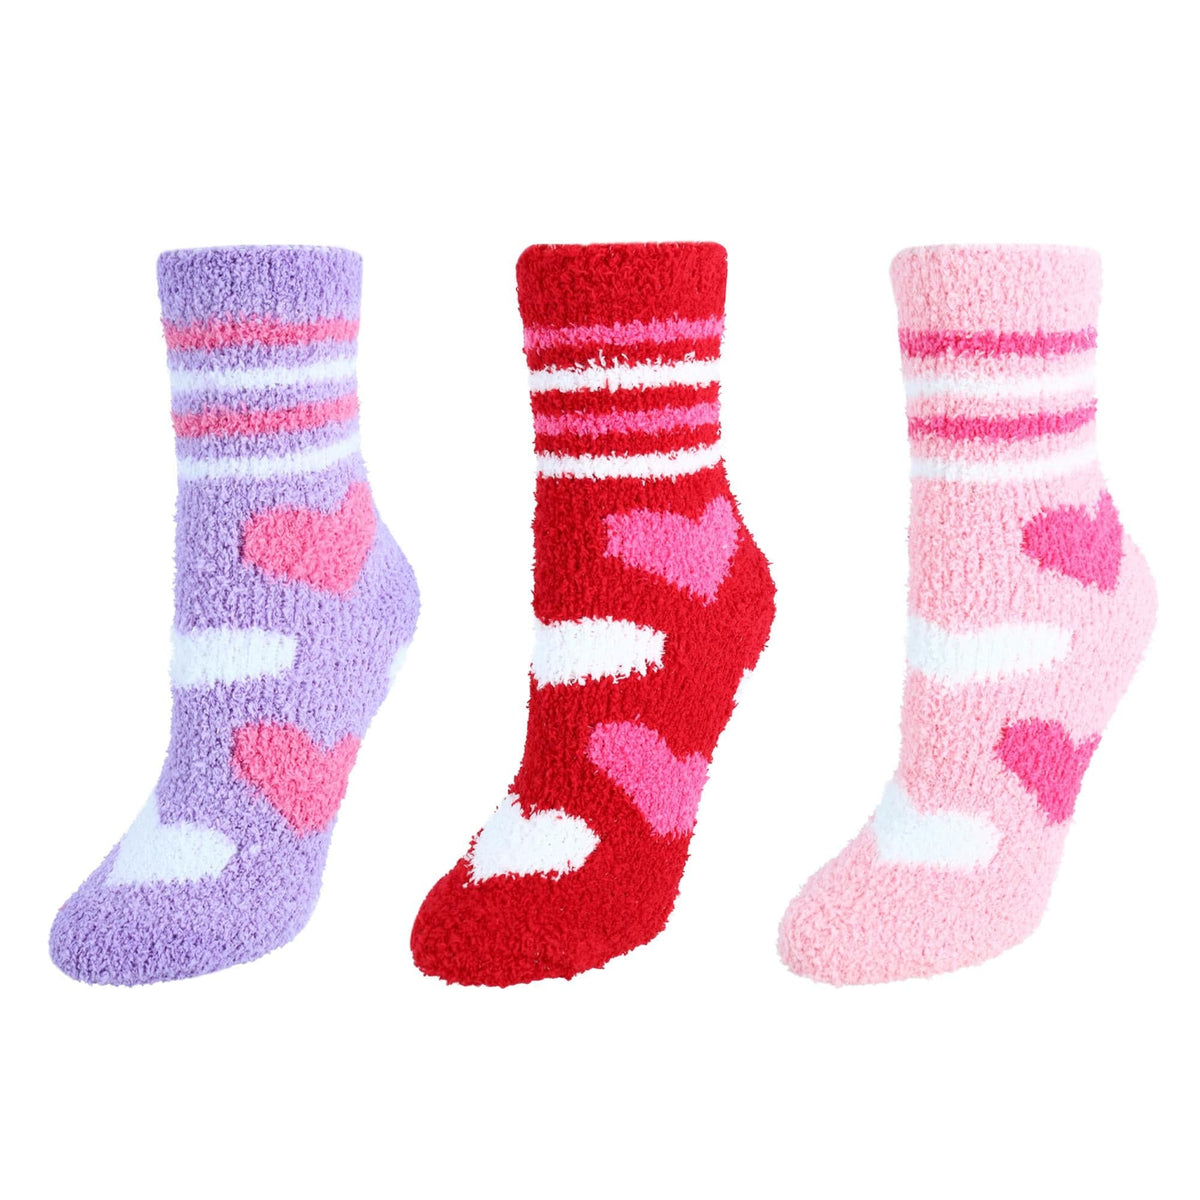 CTM Women's Striped Warm Fuzzy Socks (3 Pair Pack), Stripes